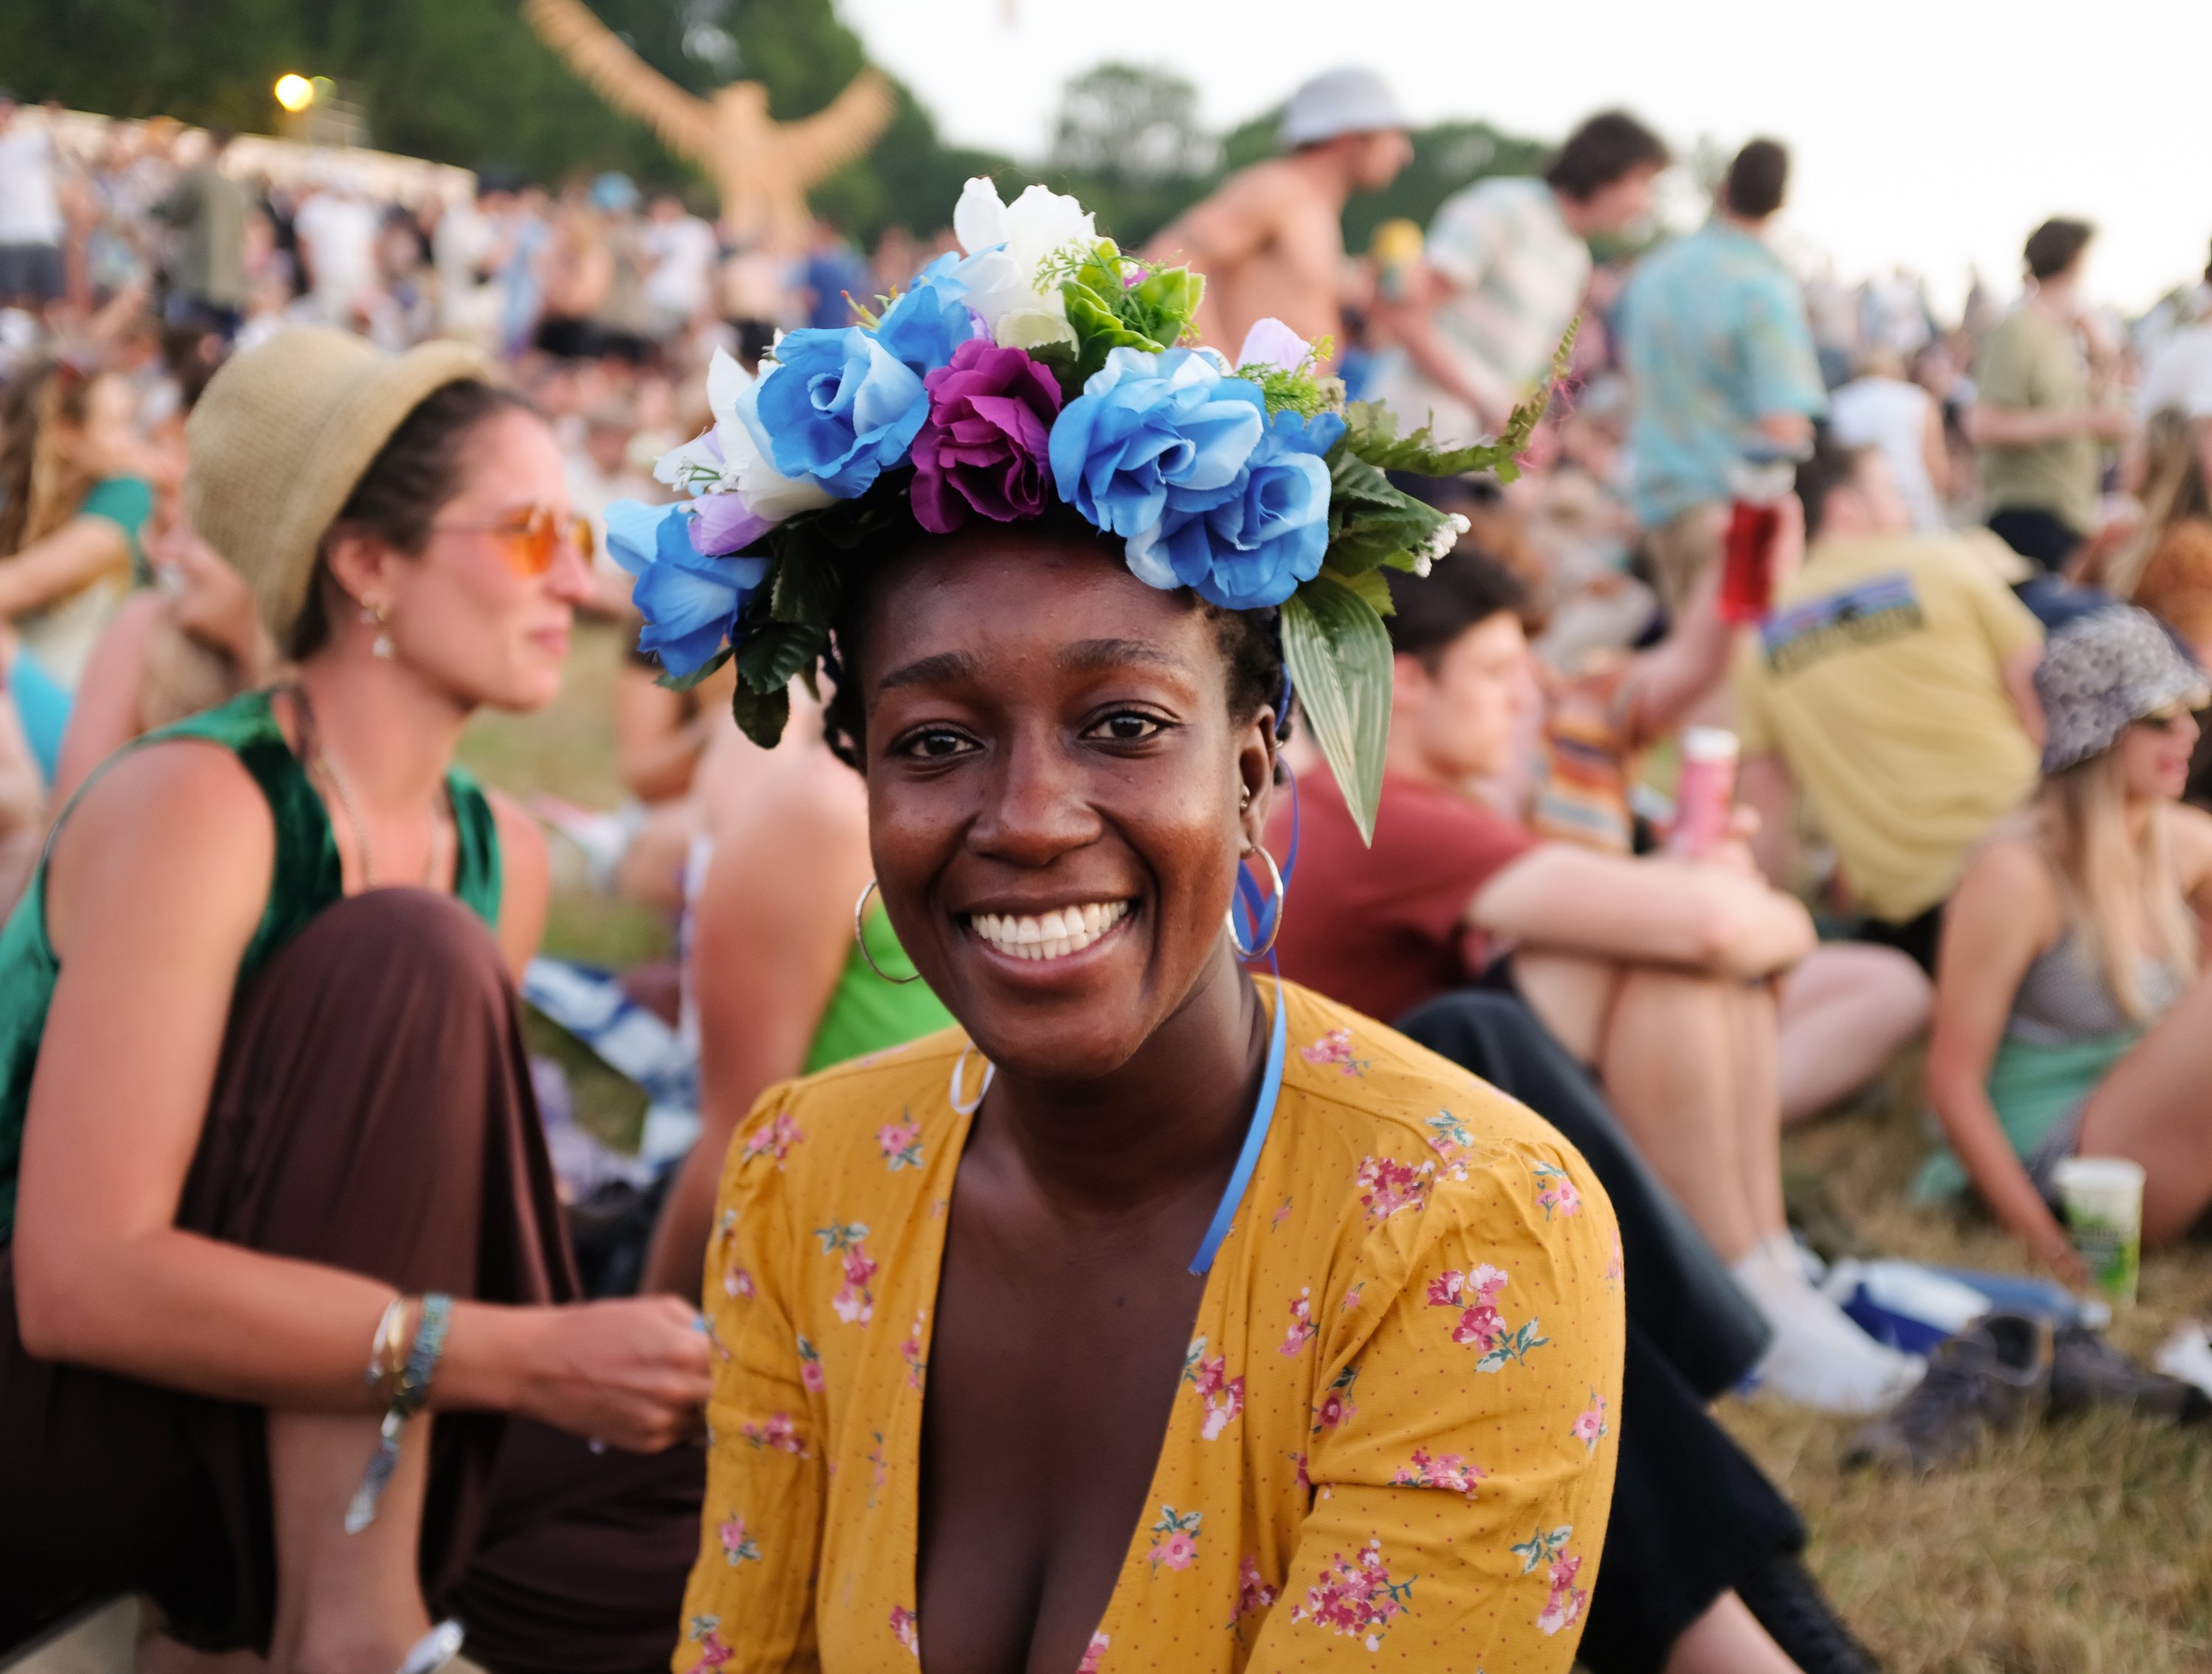 Mars Osei-Asante, 30, poses for a photo on the first day of the Glastonbury Festival, Pilton, Britain, June 22, 2022. (EPA)